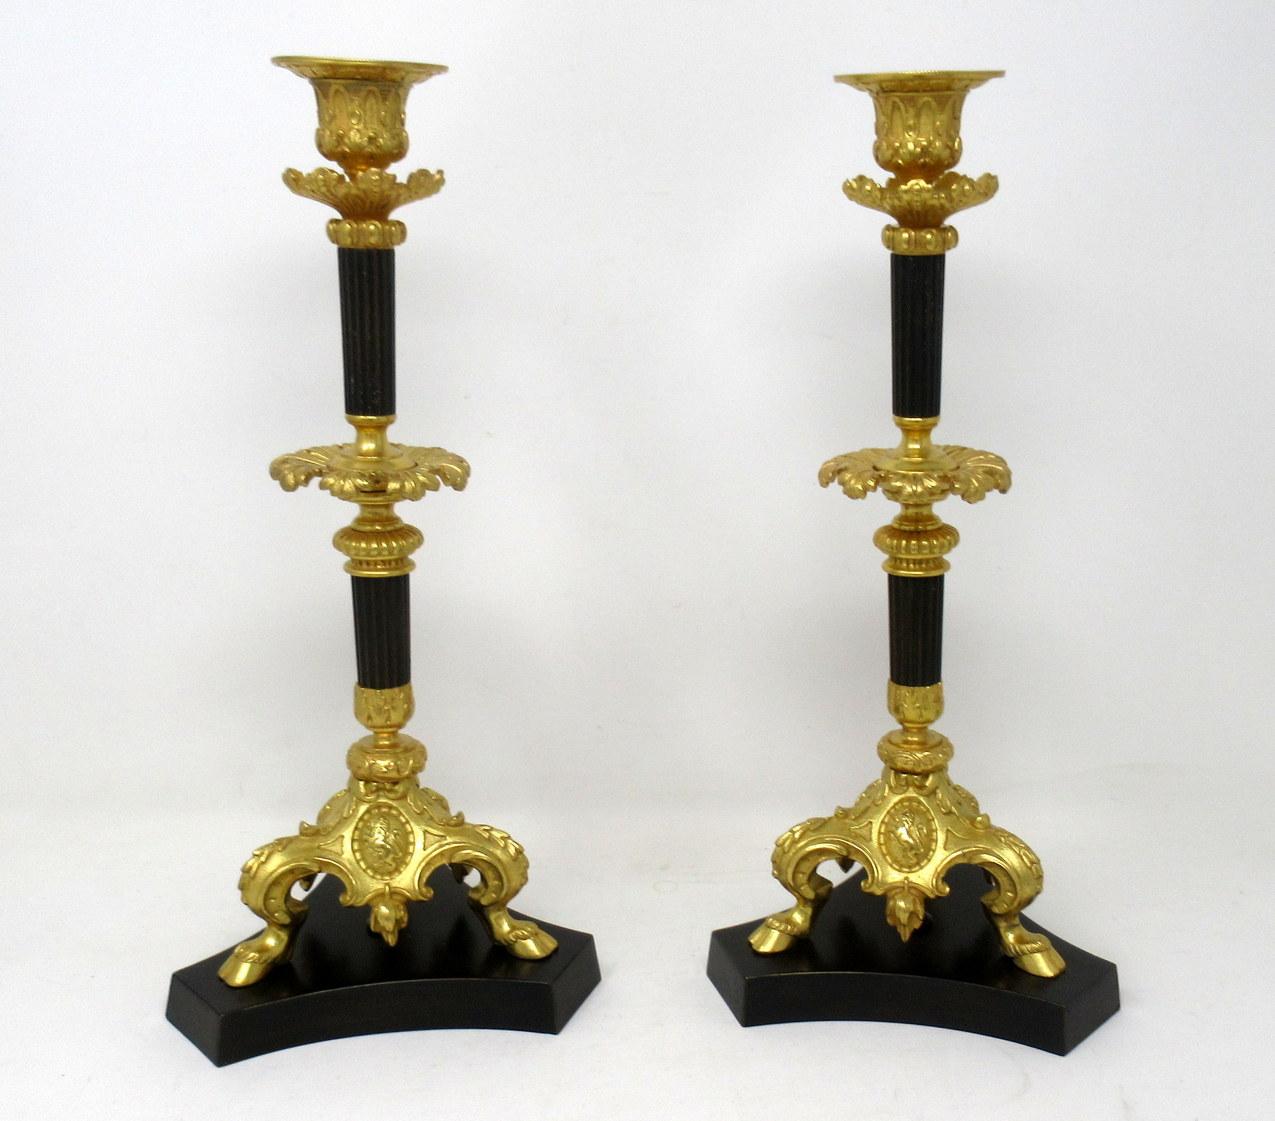 Regency Antique Pair of French Ormolu Gilt Bronze Dore Twin Arm Candelabra Candlesticks